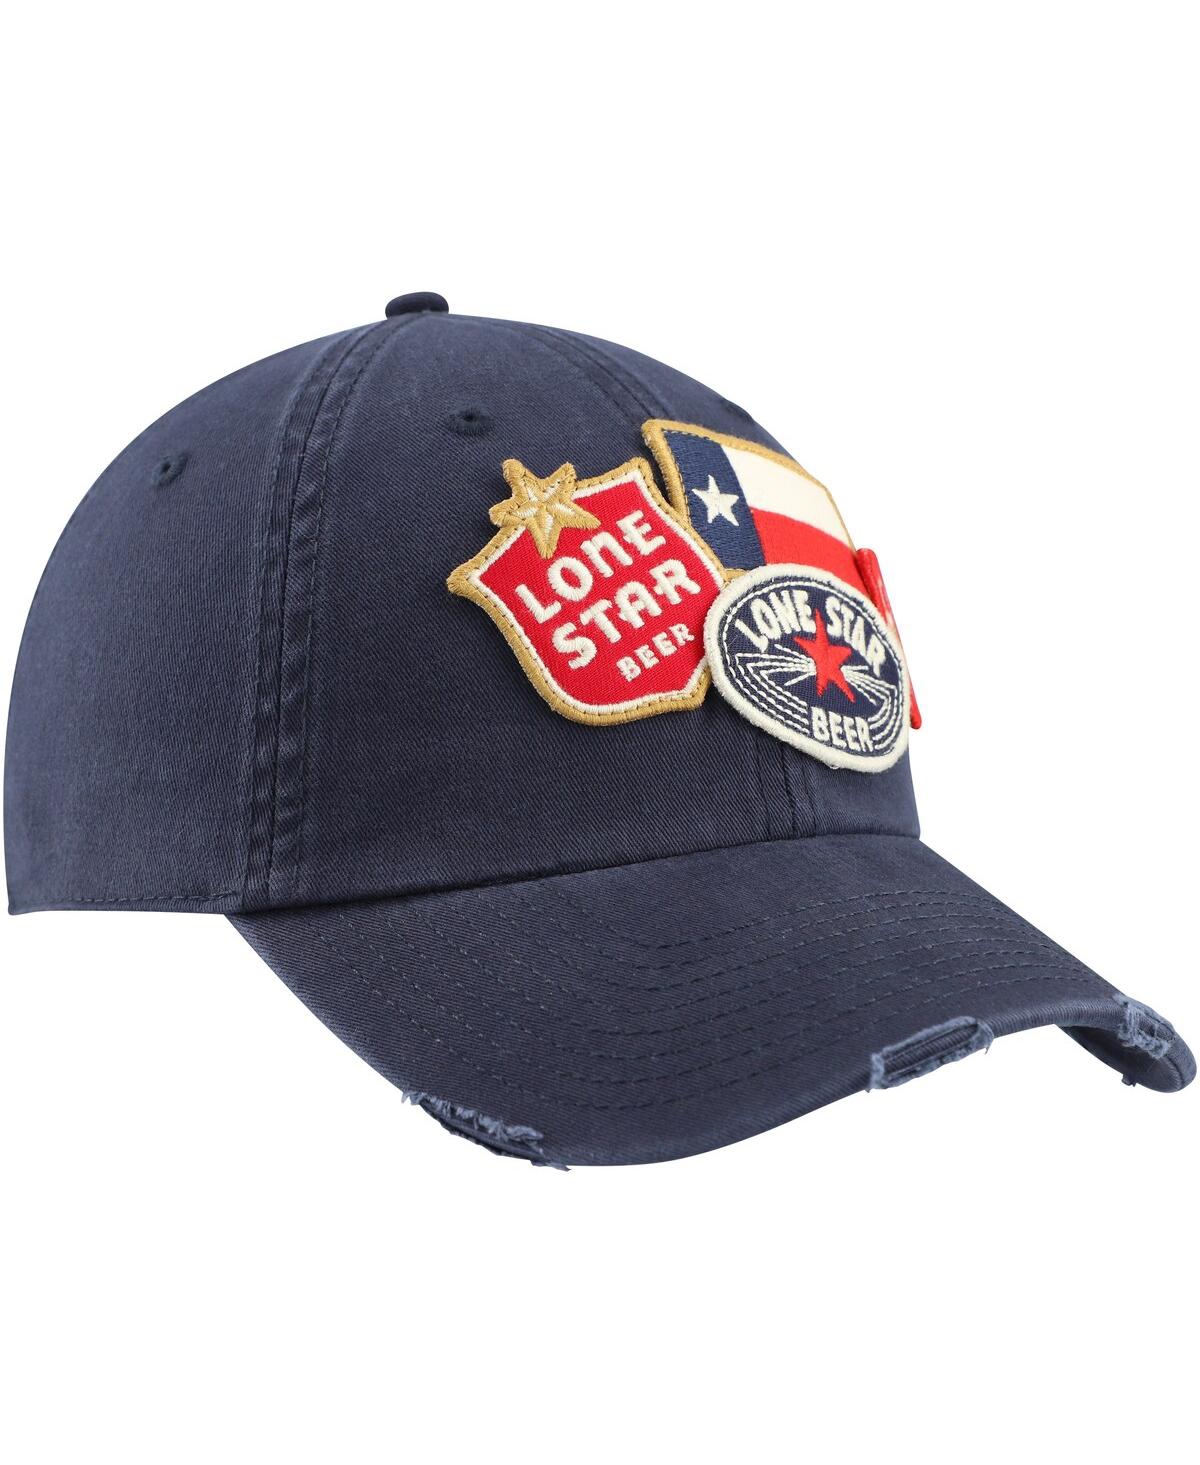 Shop American Needle Men's Blue Pabst Blue Ribbon Iconic Adjustable Hat